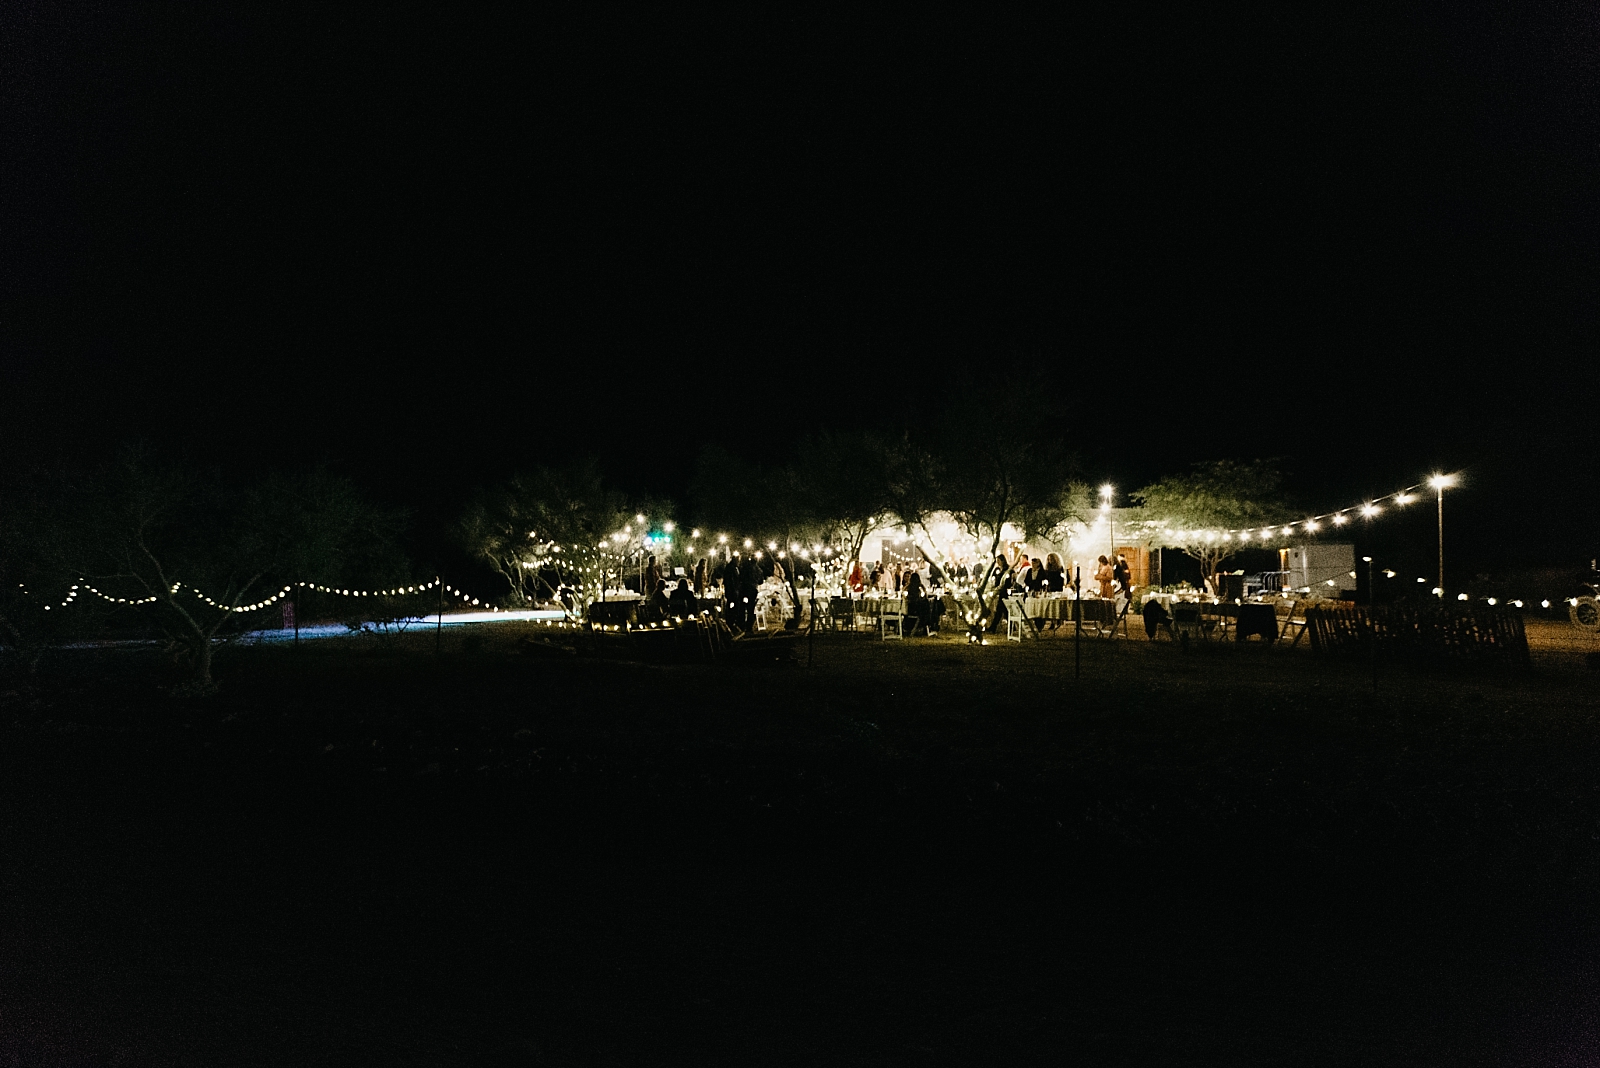 diy string lights phoenix desert backyard wedding reception photos new river az arizona samantha patri photography